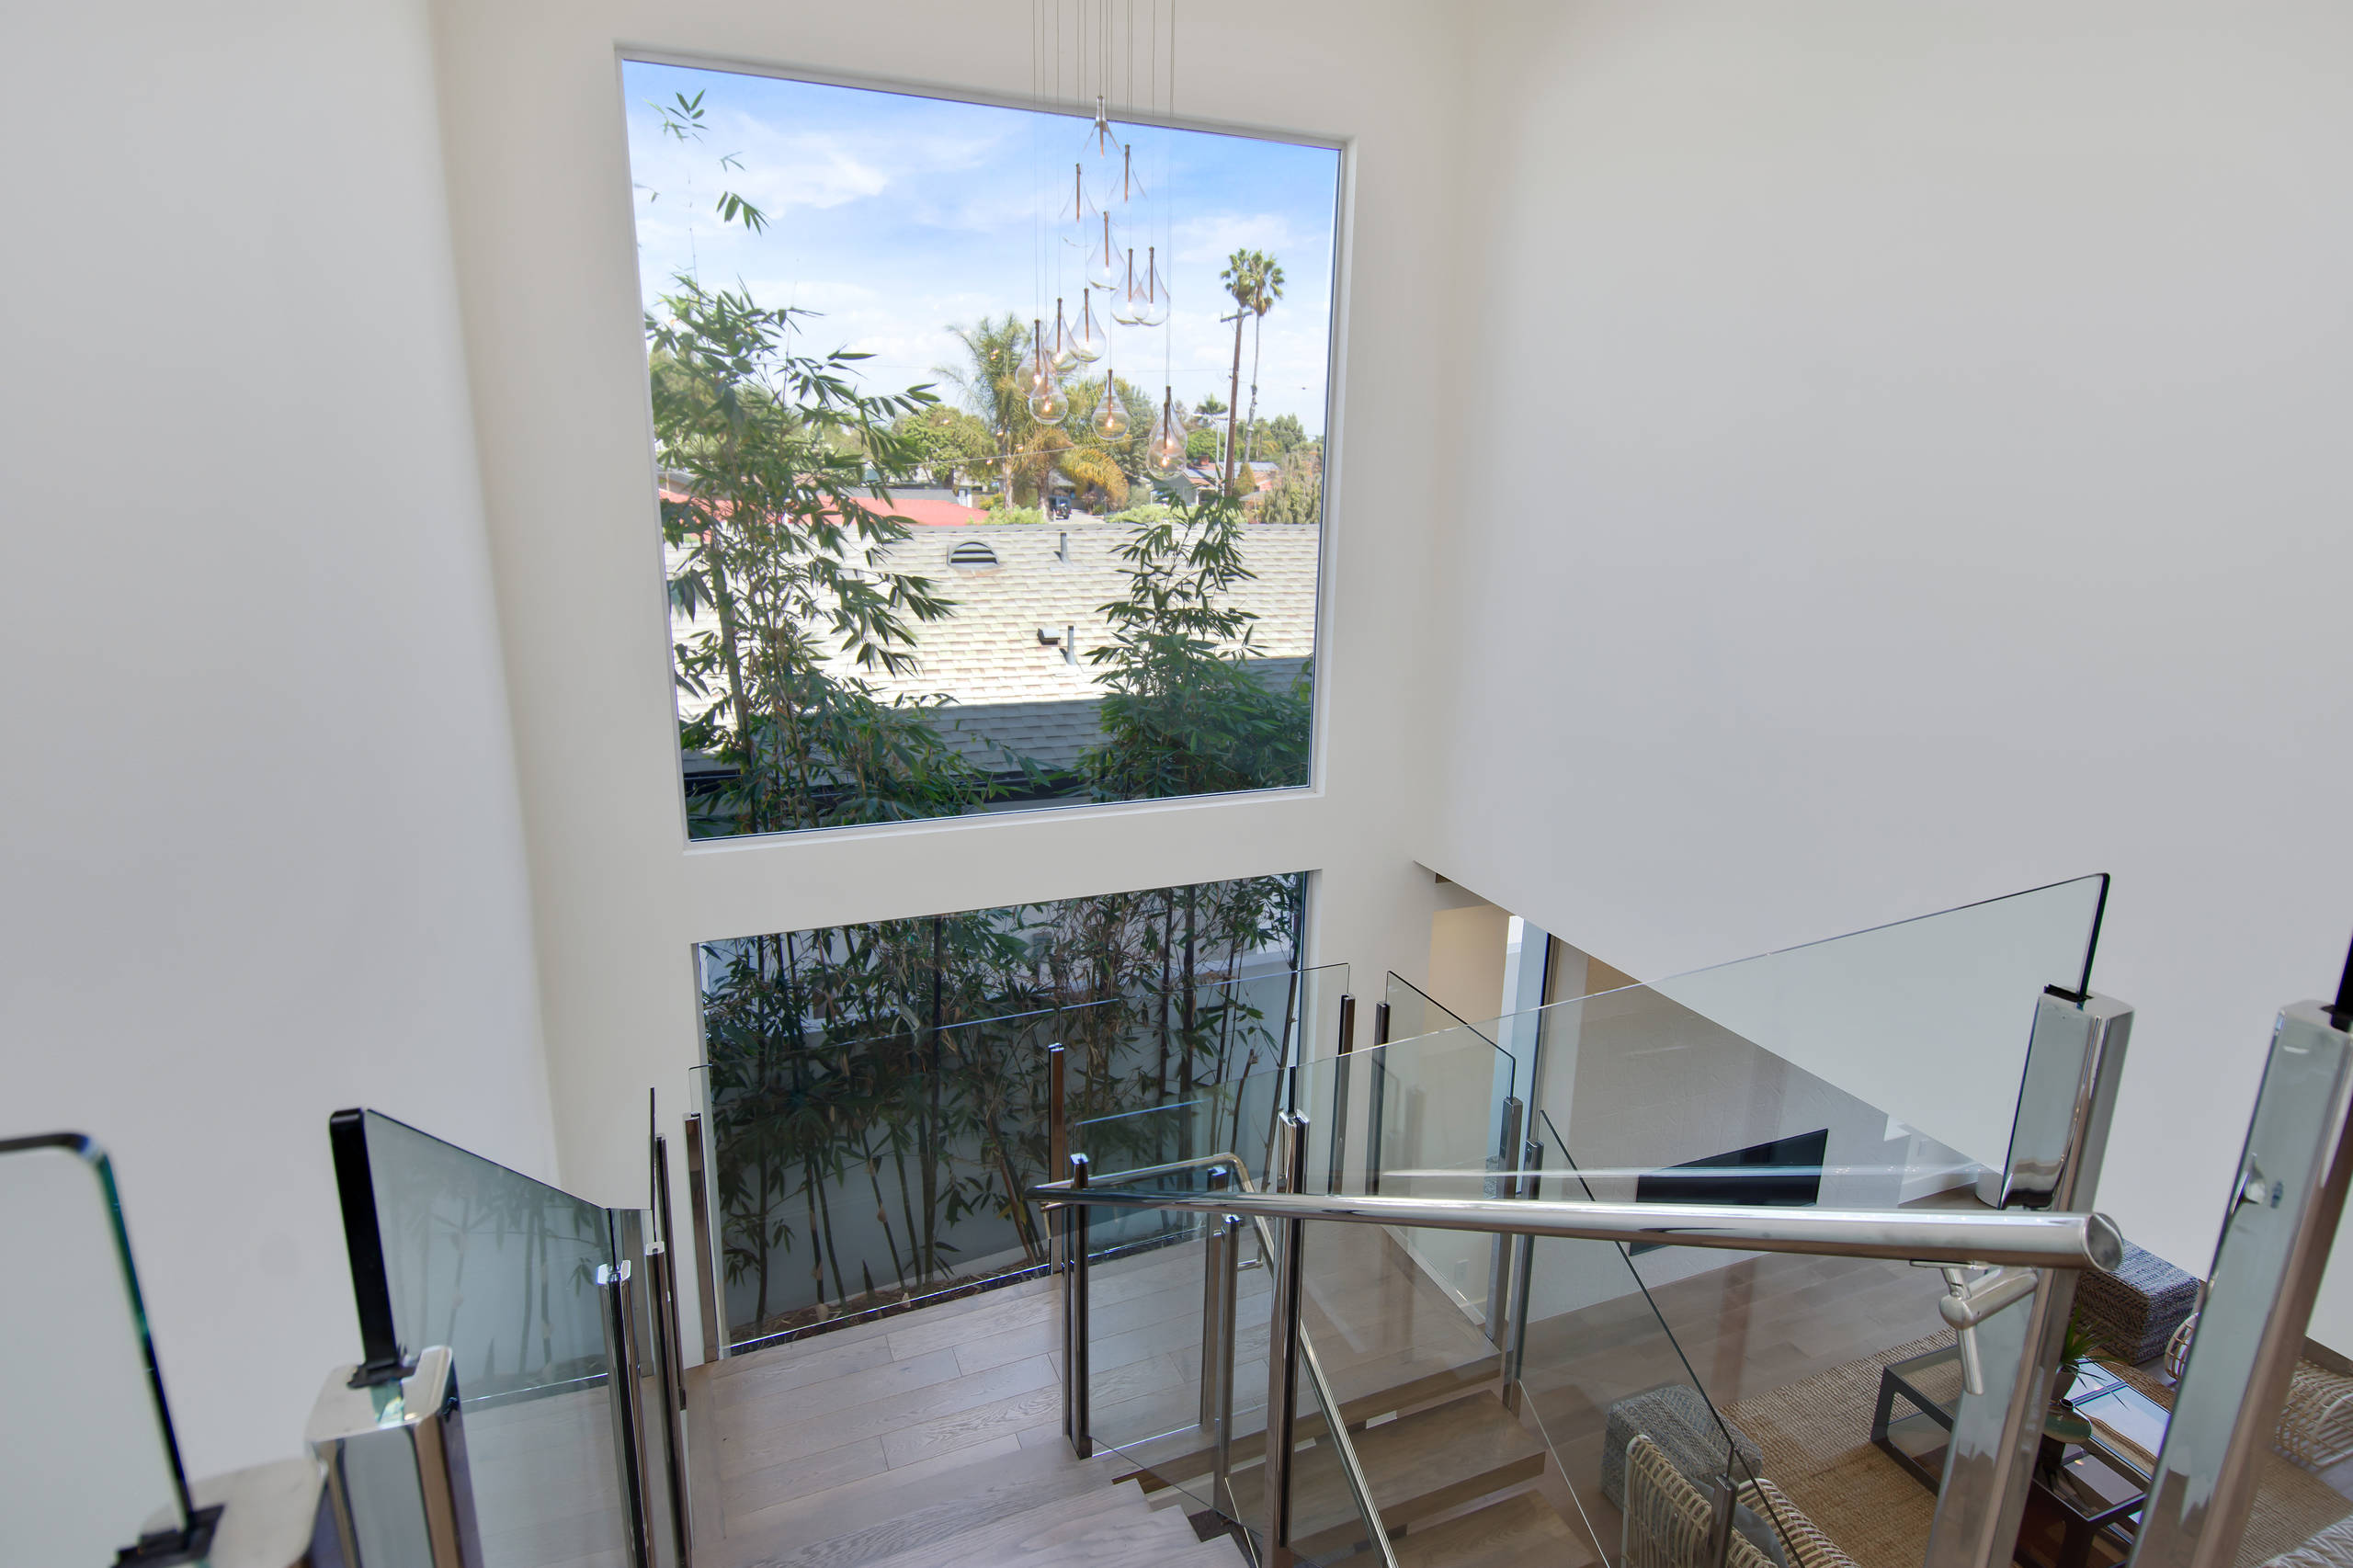 Stairway | Hallmark Moderno, Mohegan Oak, Venice, CA - Michelle Anaya